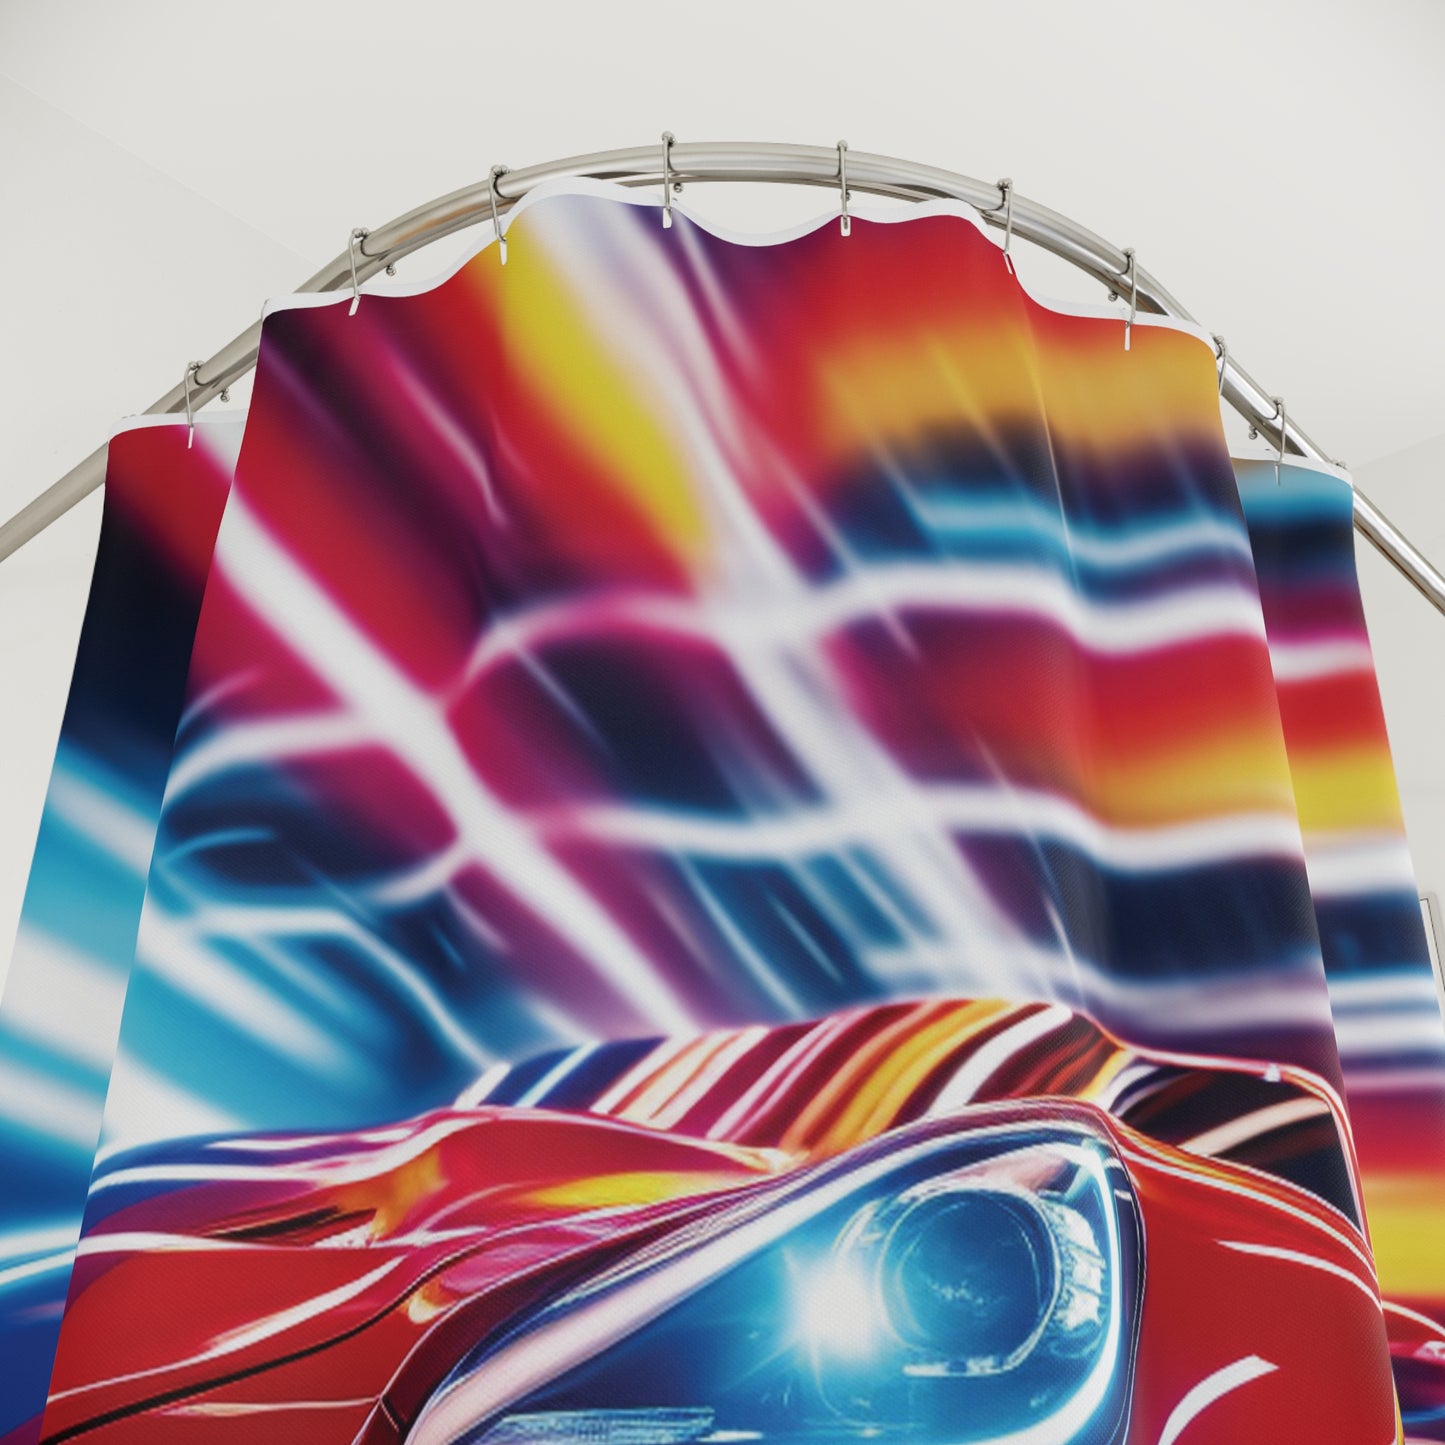 Polyester Shower Curtain Macro Flag Ferrari 1